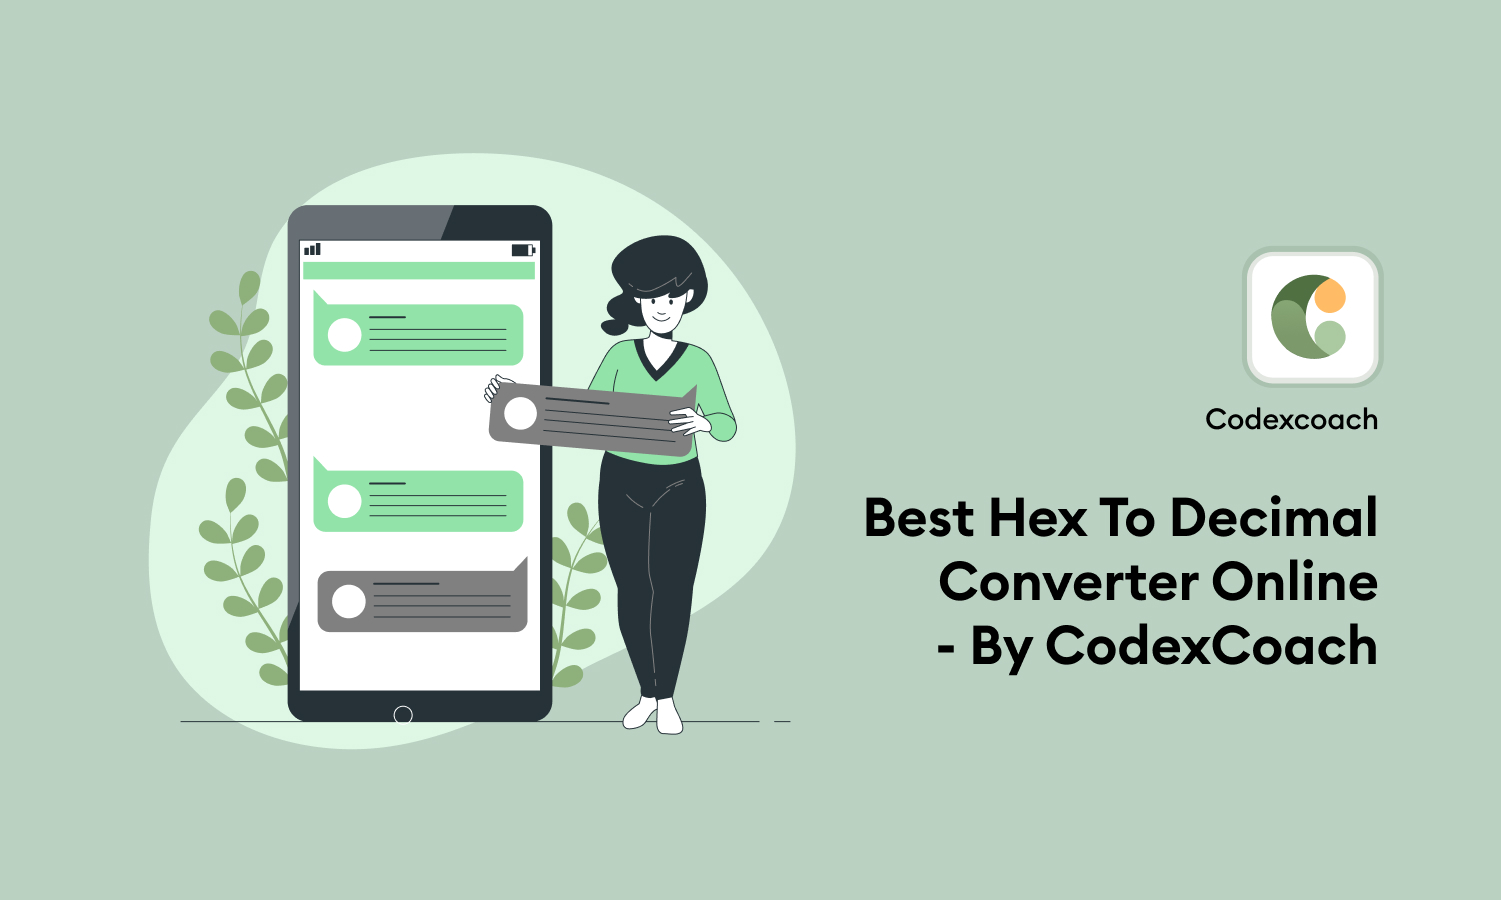 Best Hex To Decimal Converter Online By